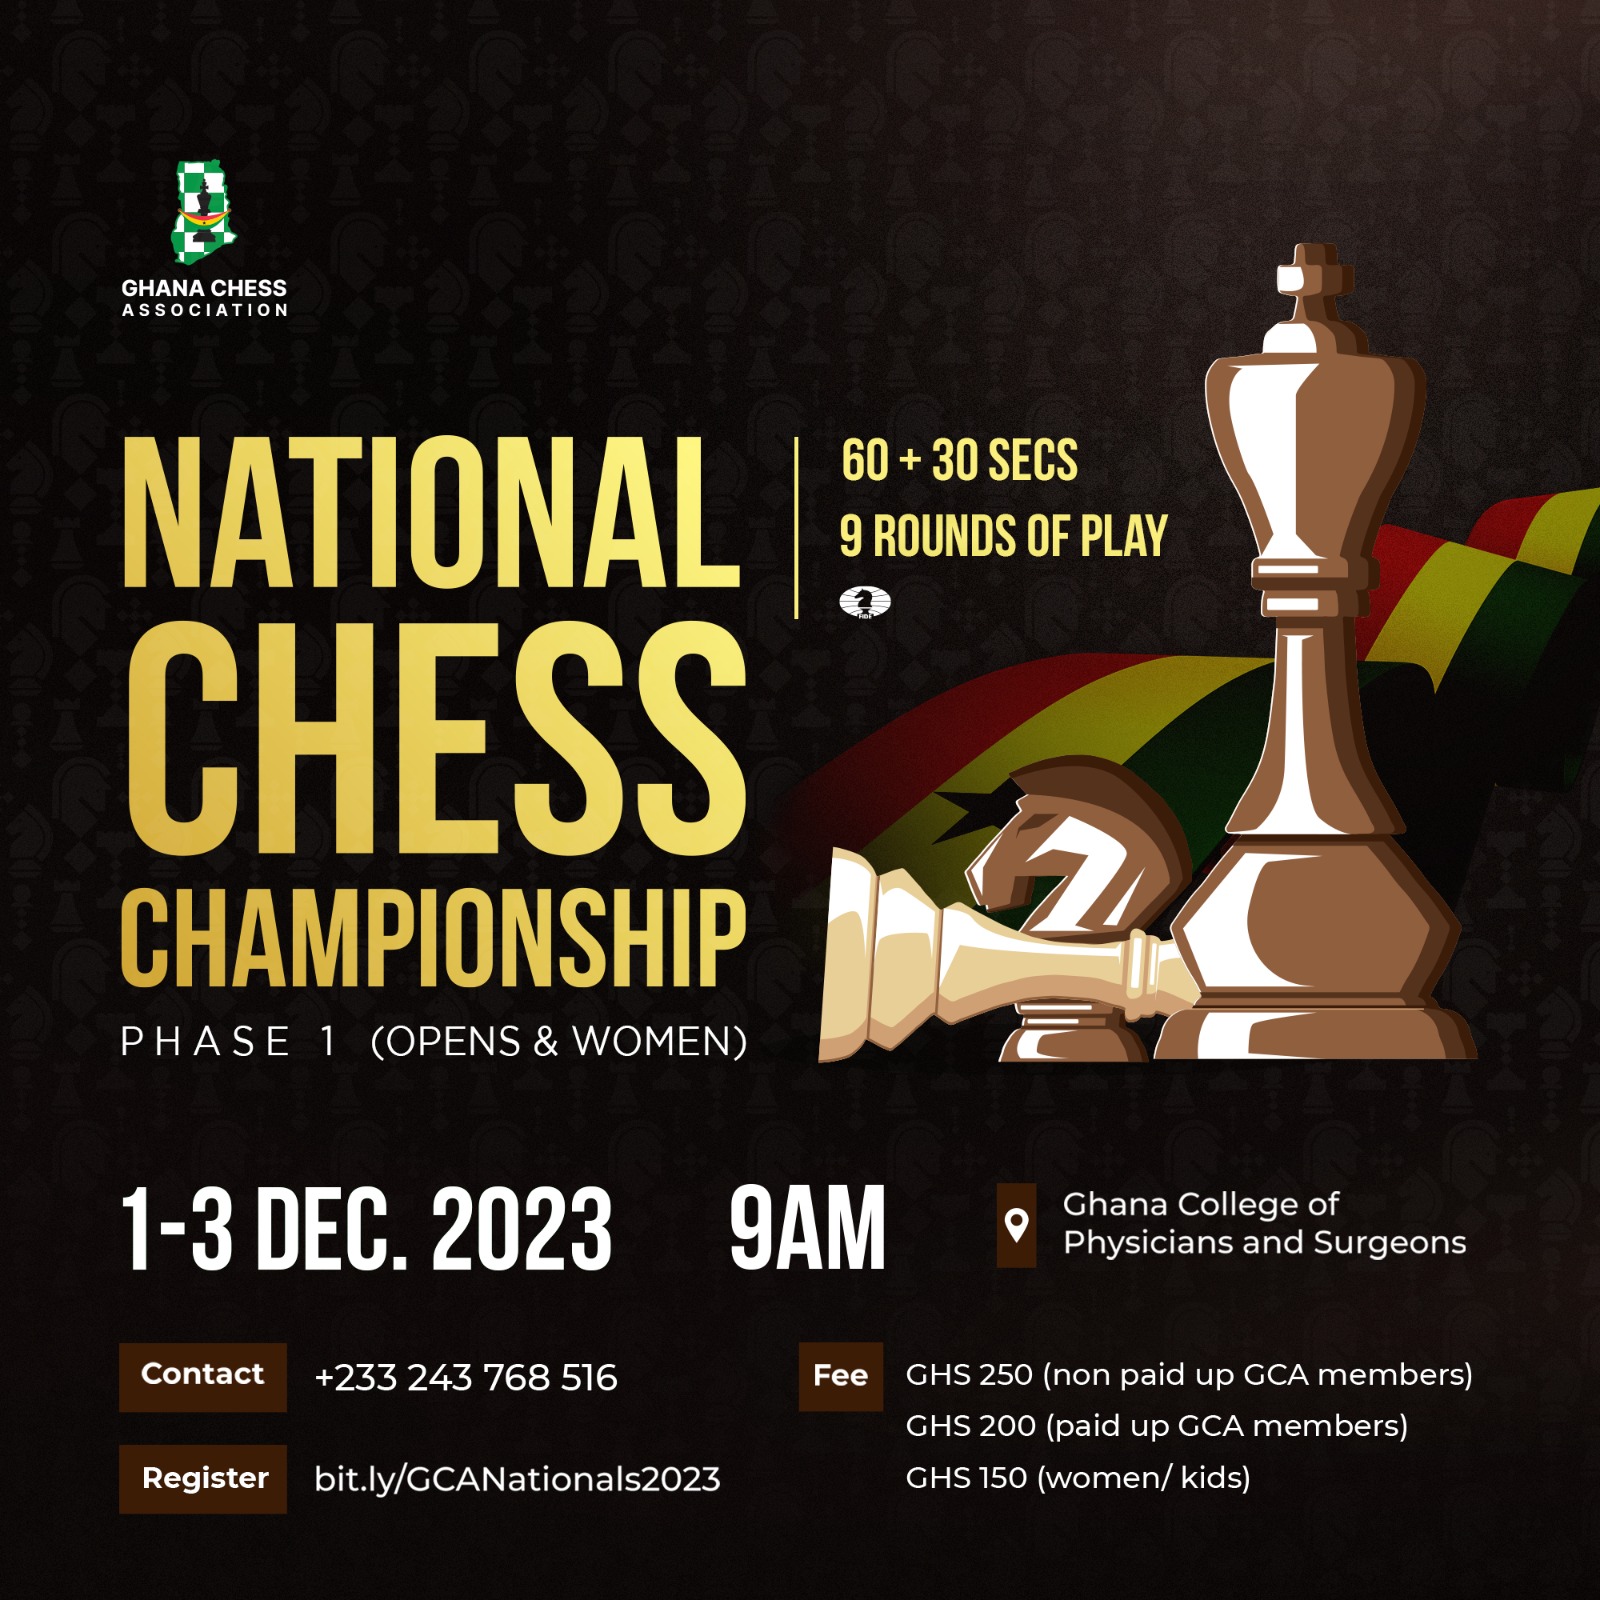 National Chess Championship 2023 - Phase 1 flyer